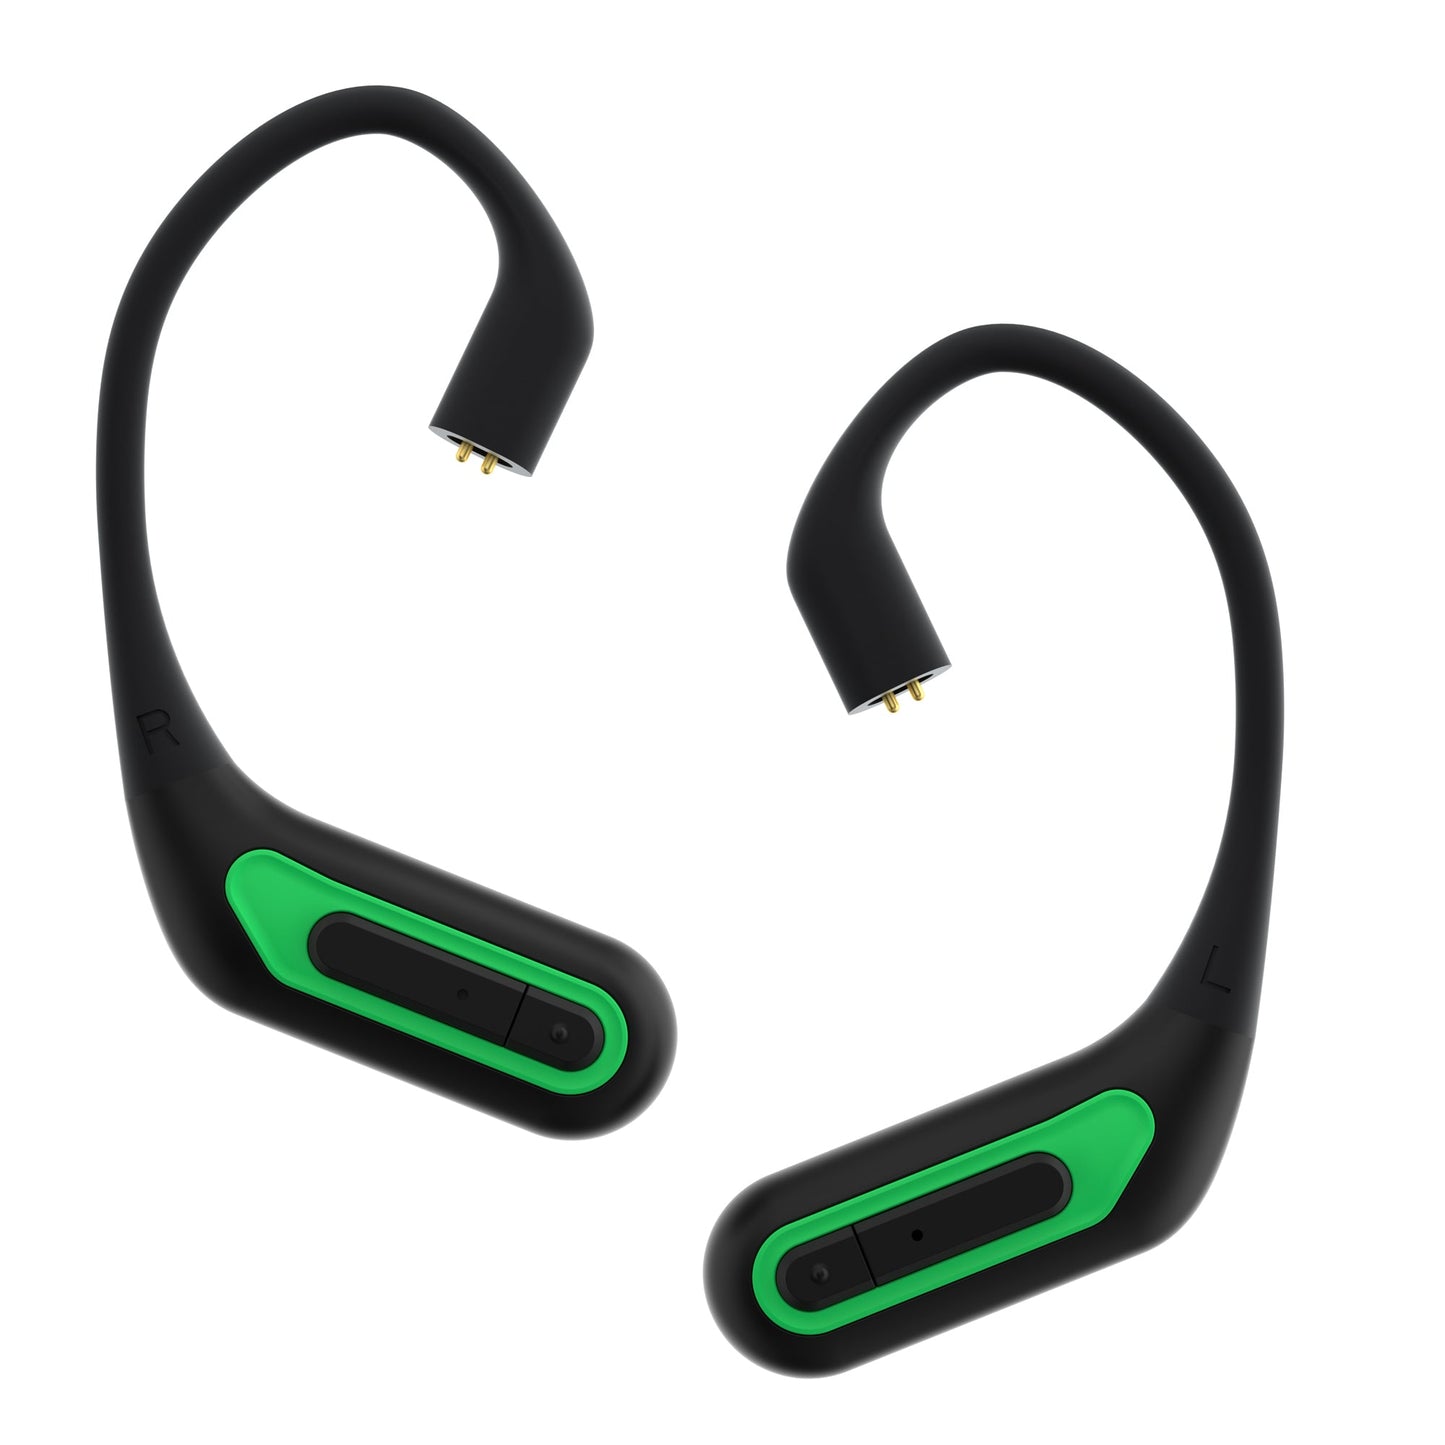 KZ AZ10 - TWS HD Bluetooth Ear hooks